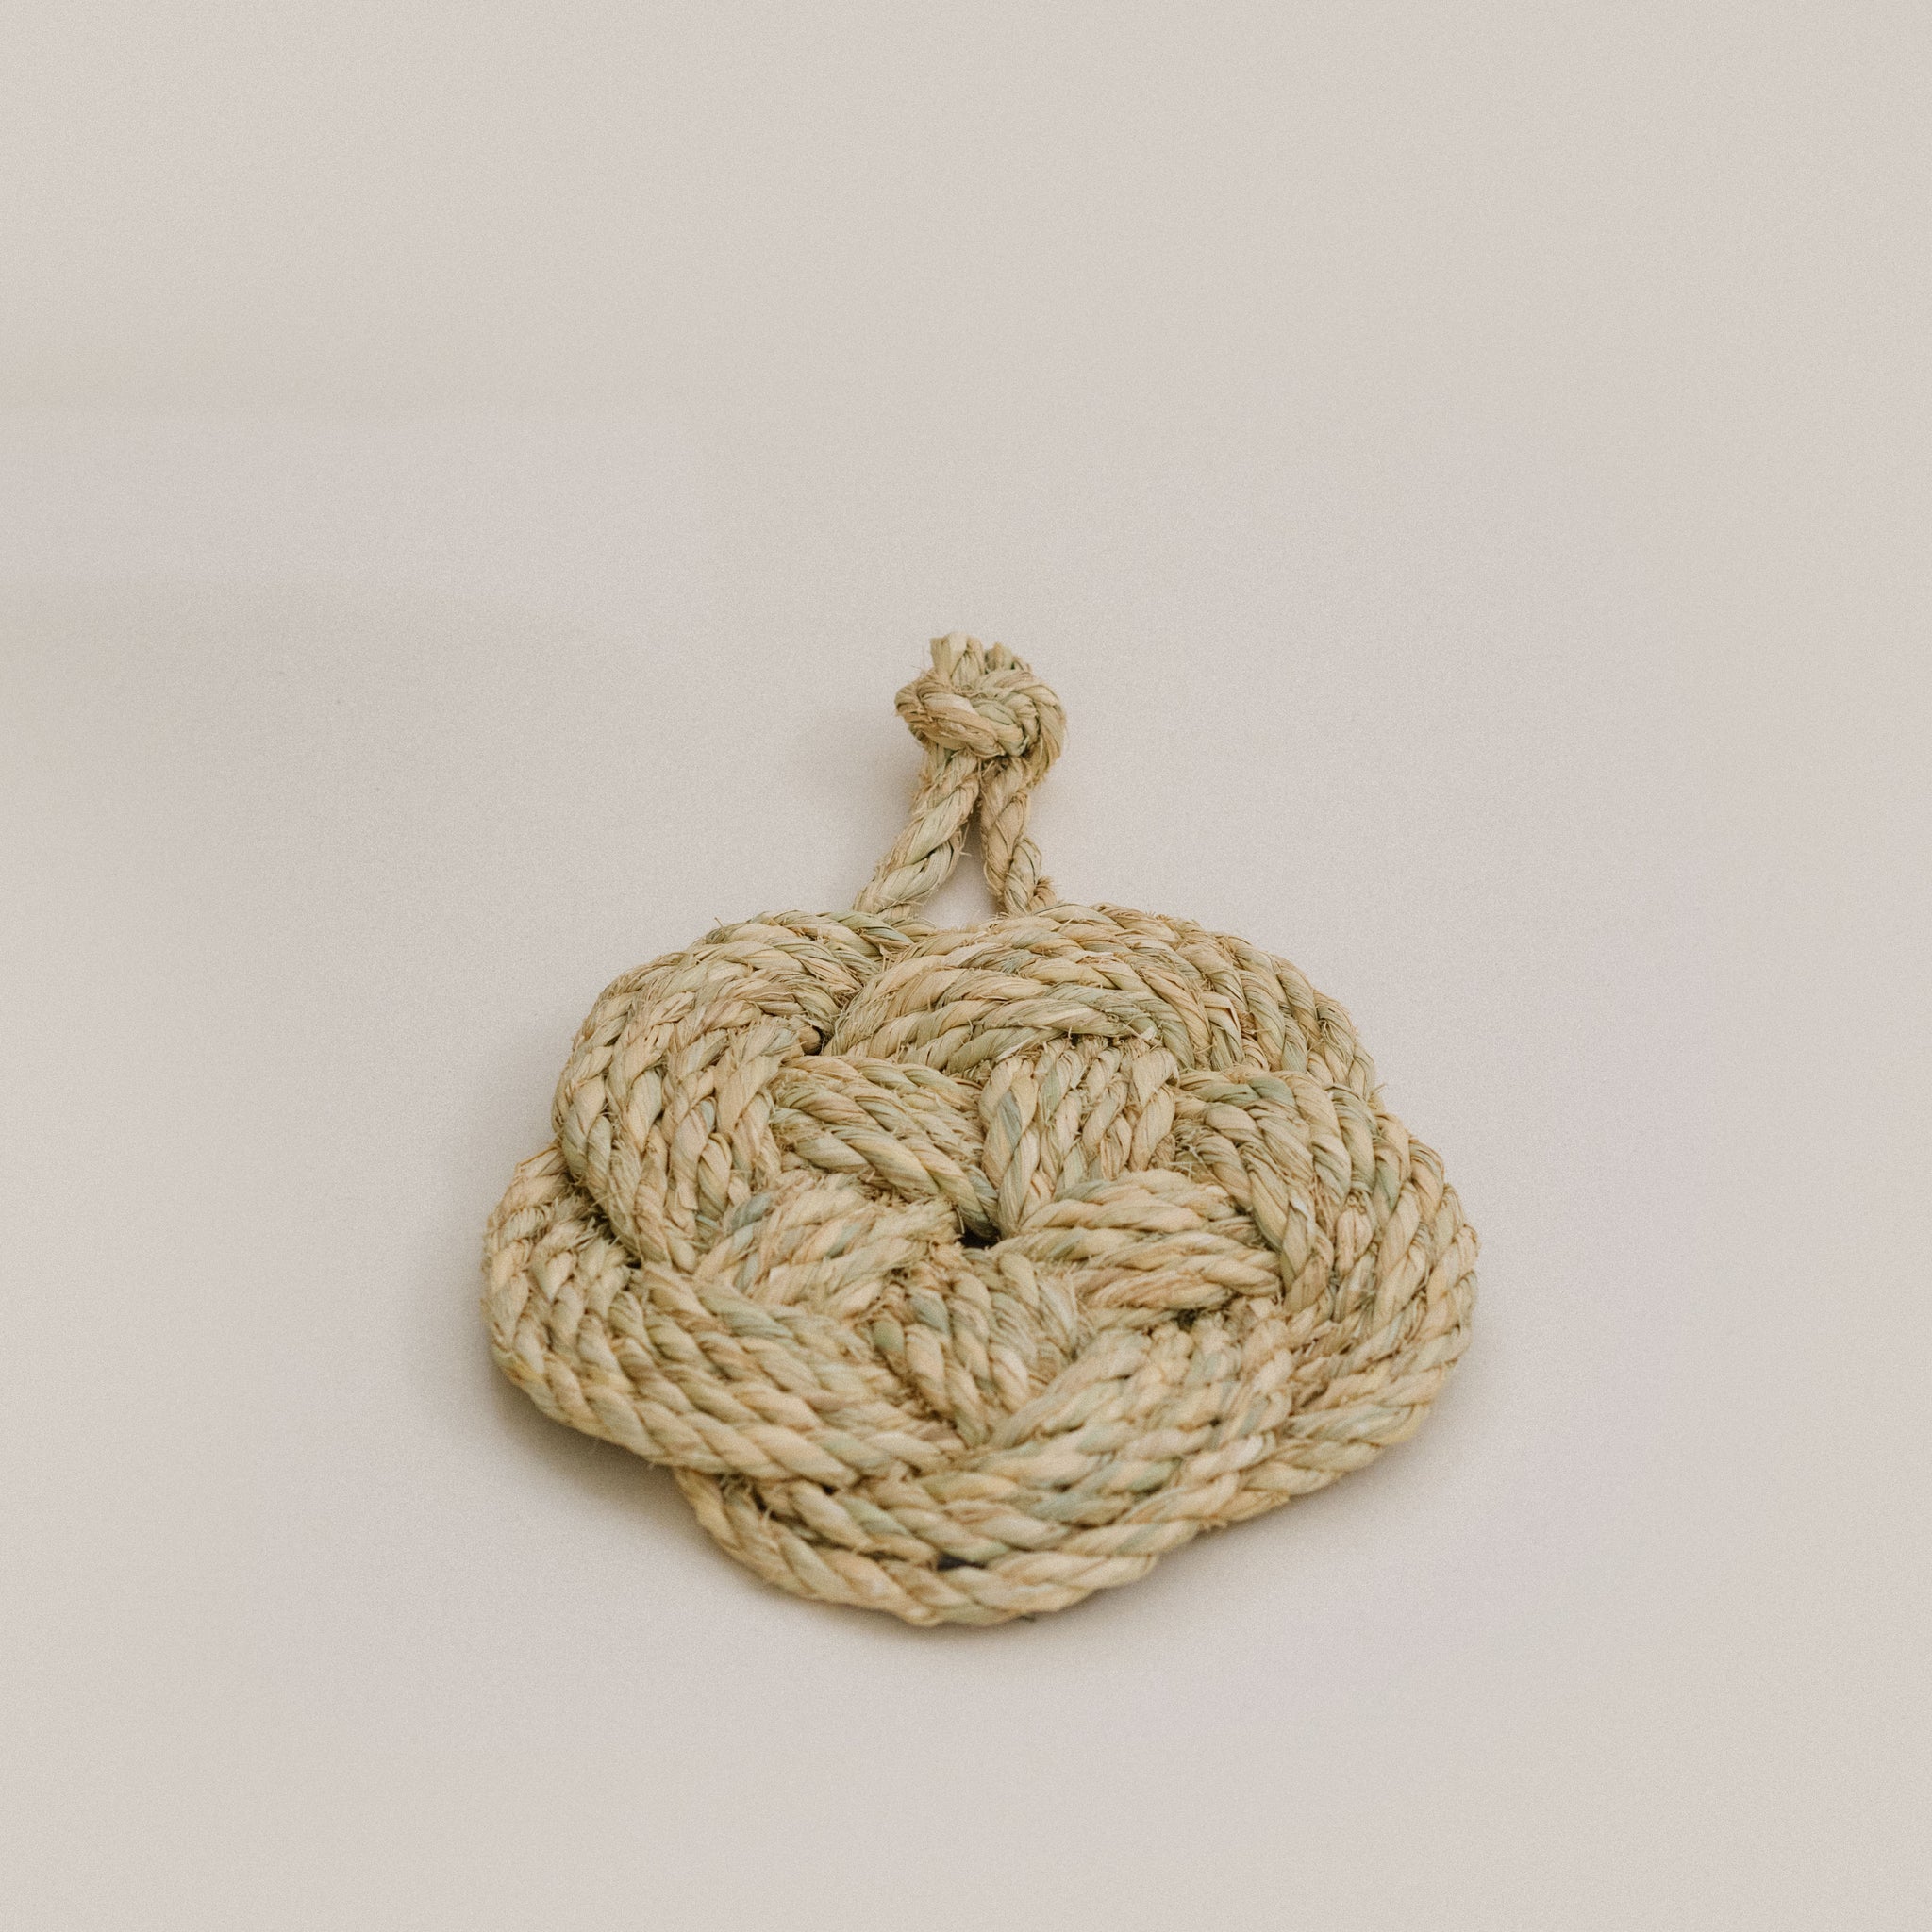 Woven Rice Straw Trivet – Plum Blossom